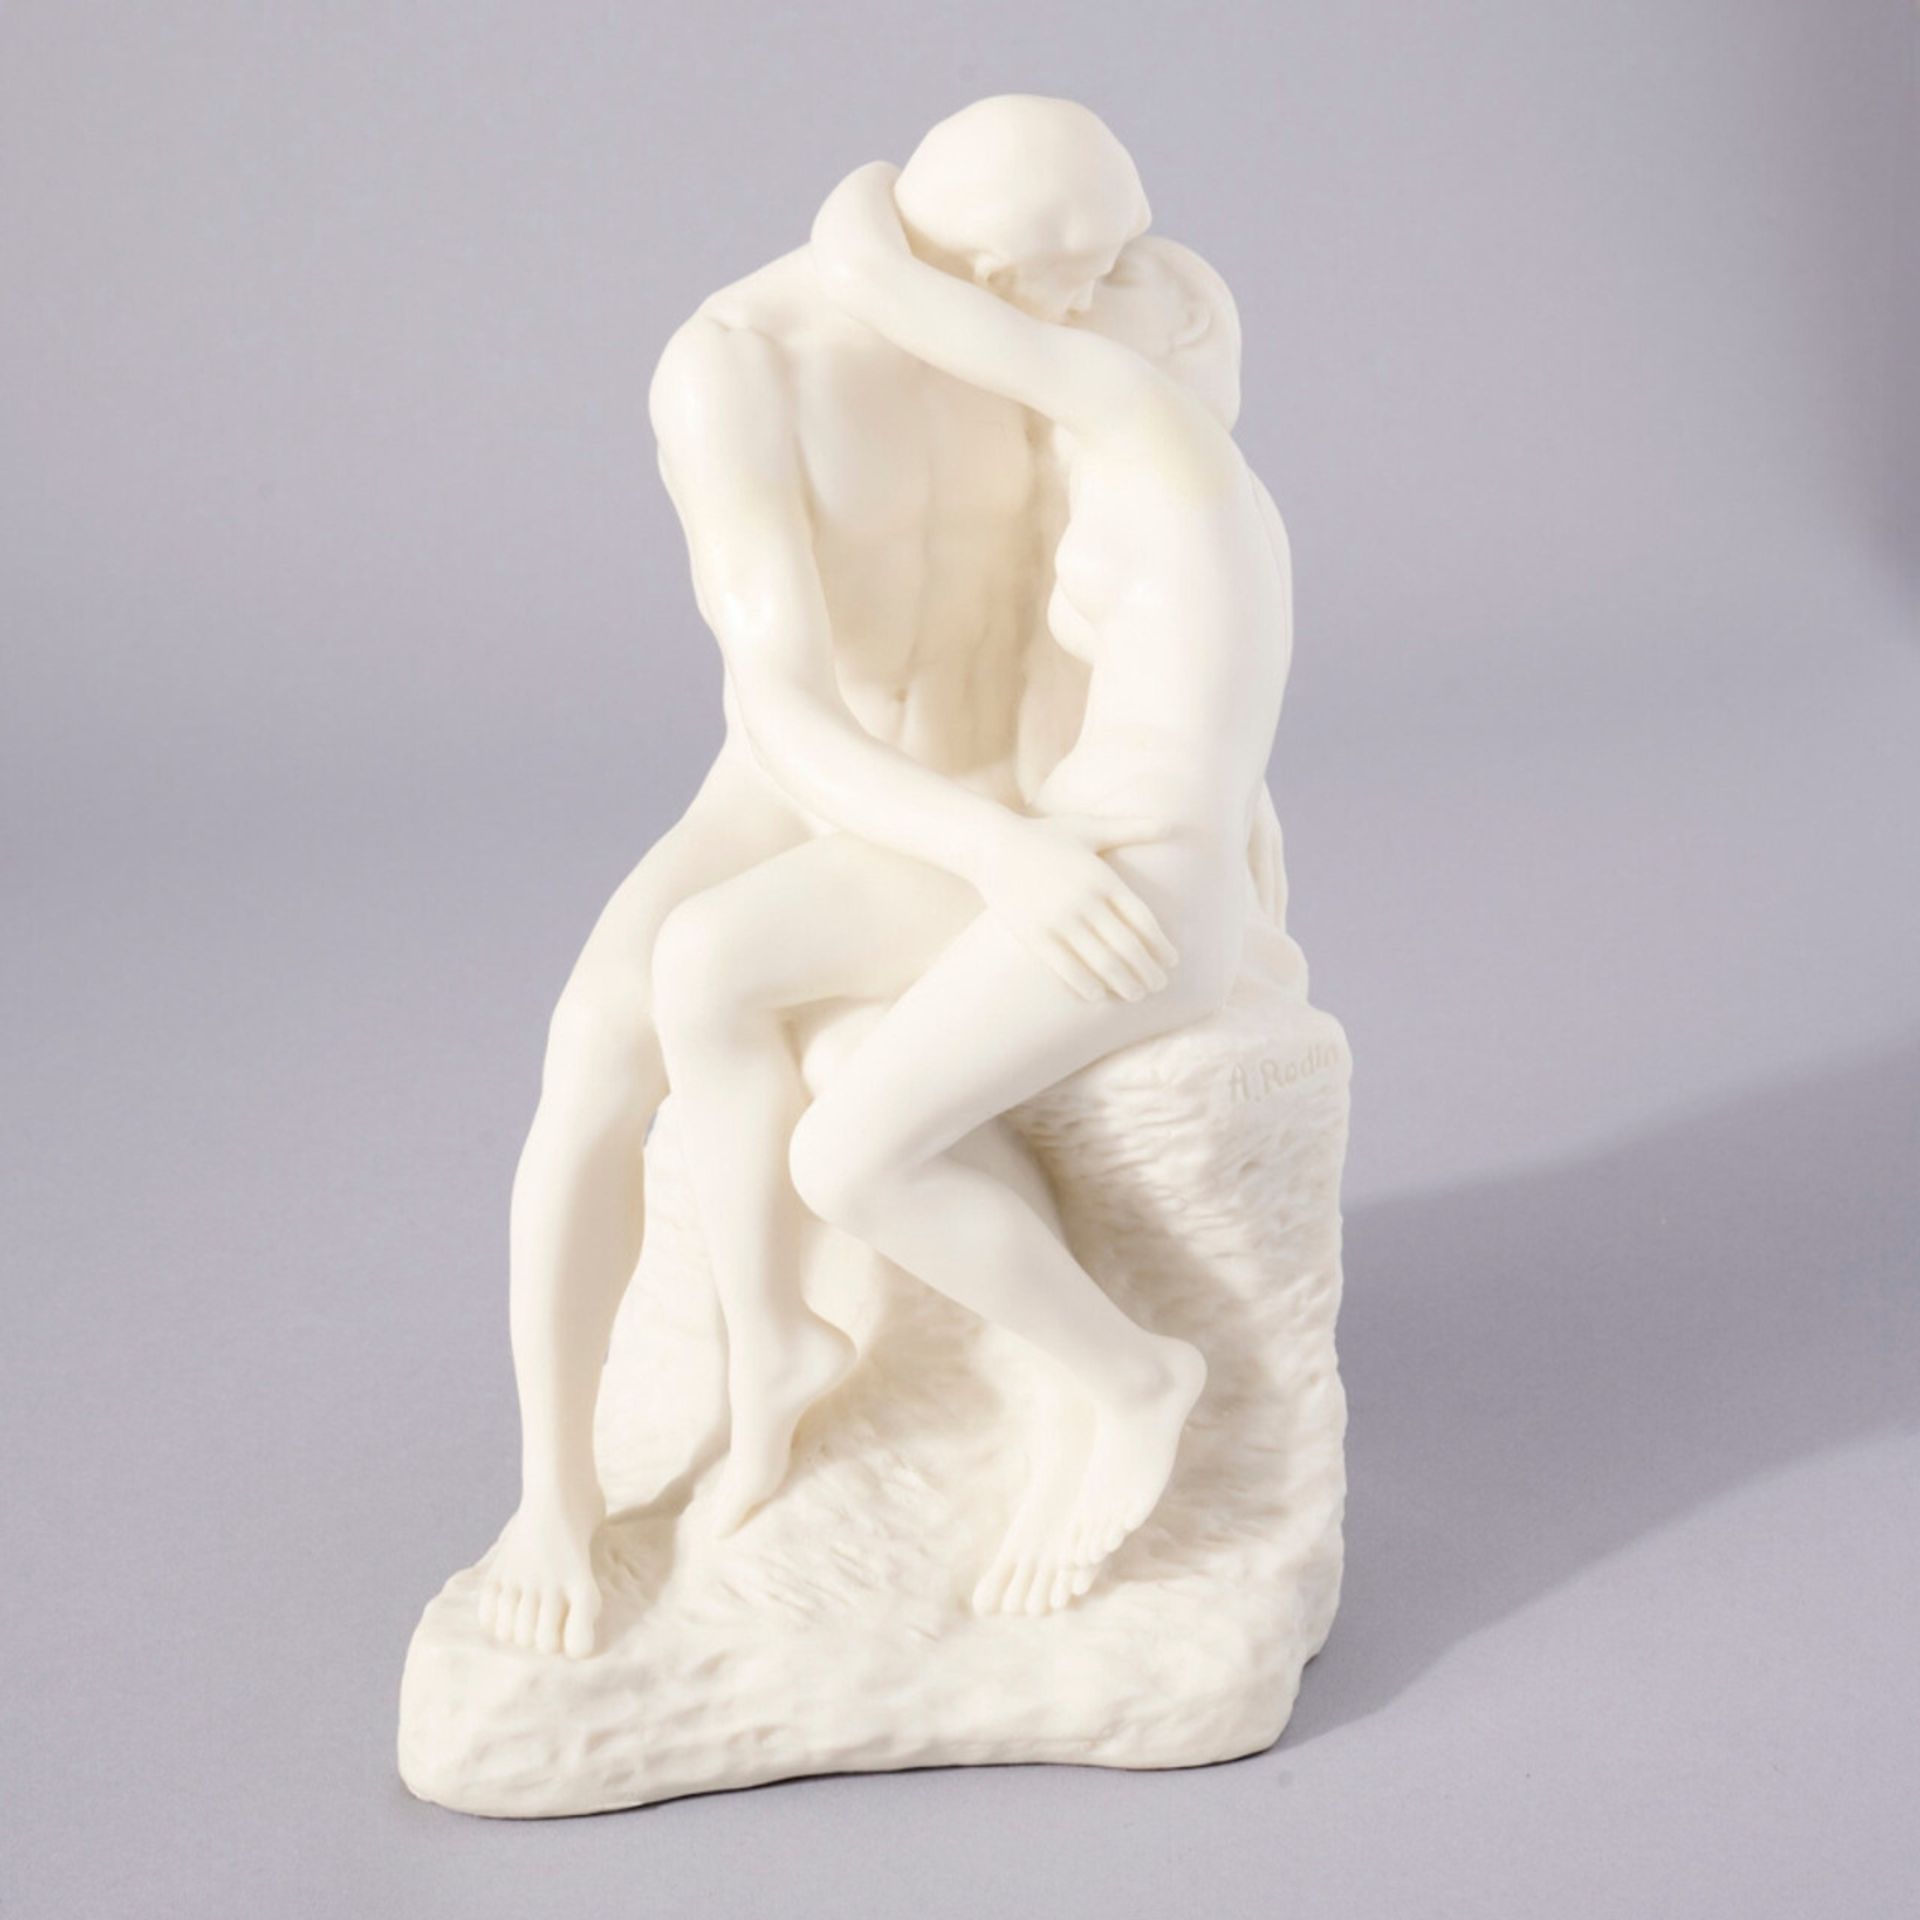 Auguste Rodin "The Kiss" Sculpture